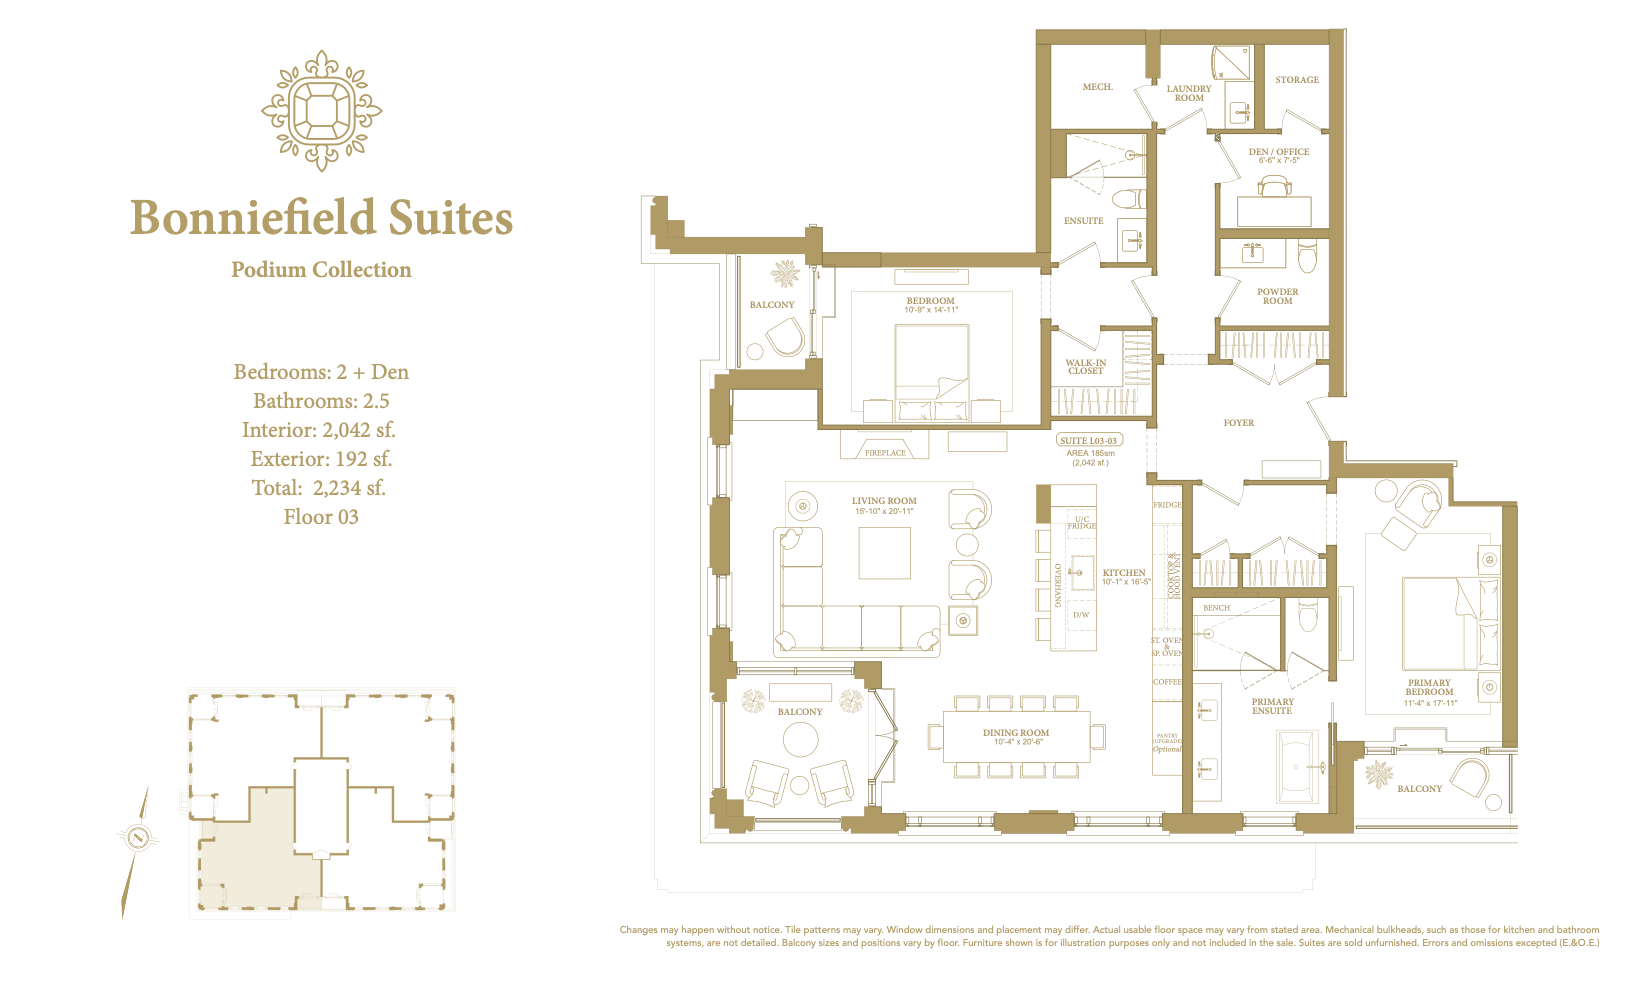 Bonniefield Suites floor plan